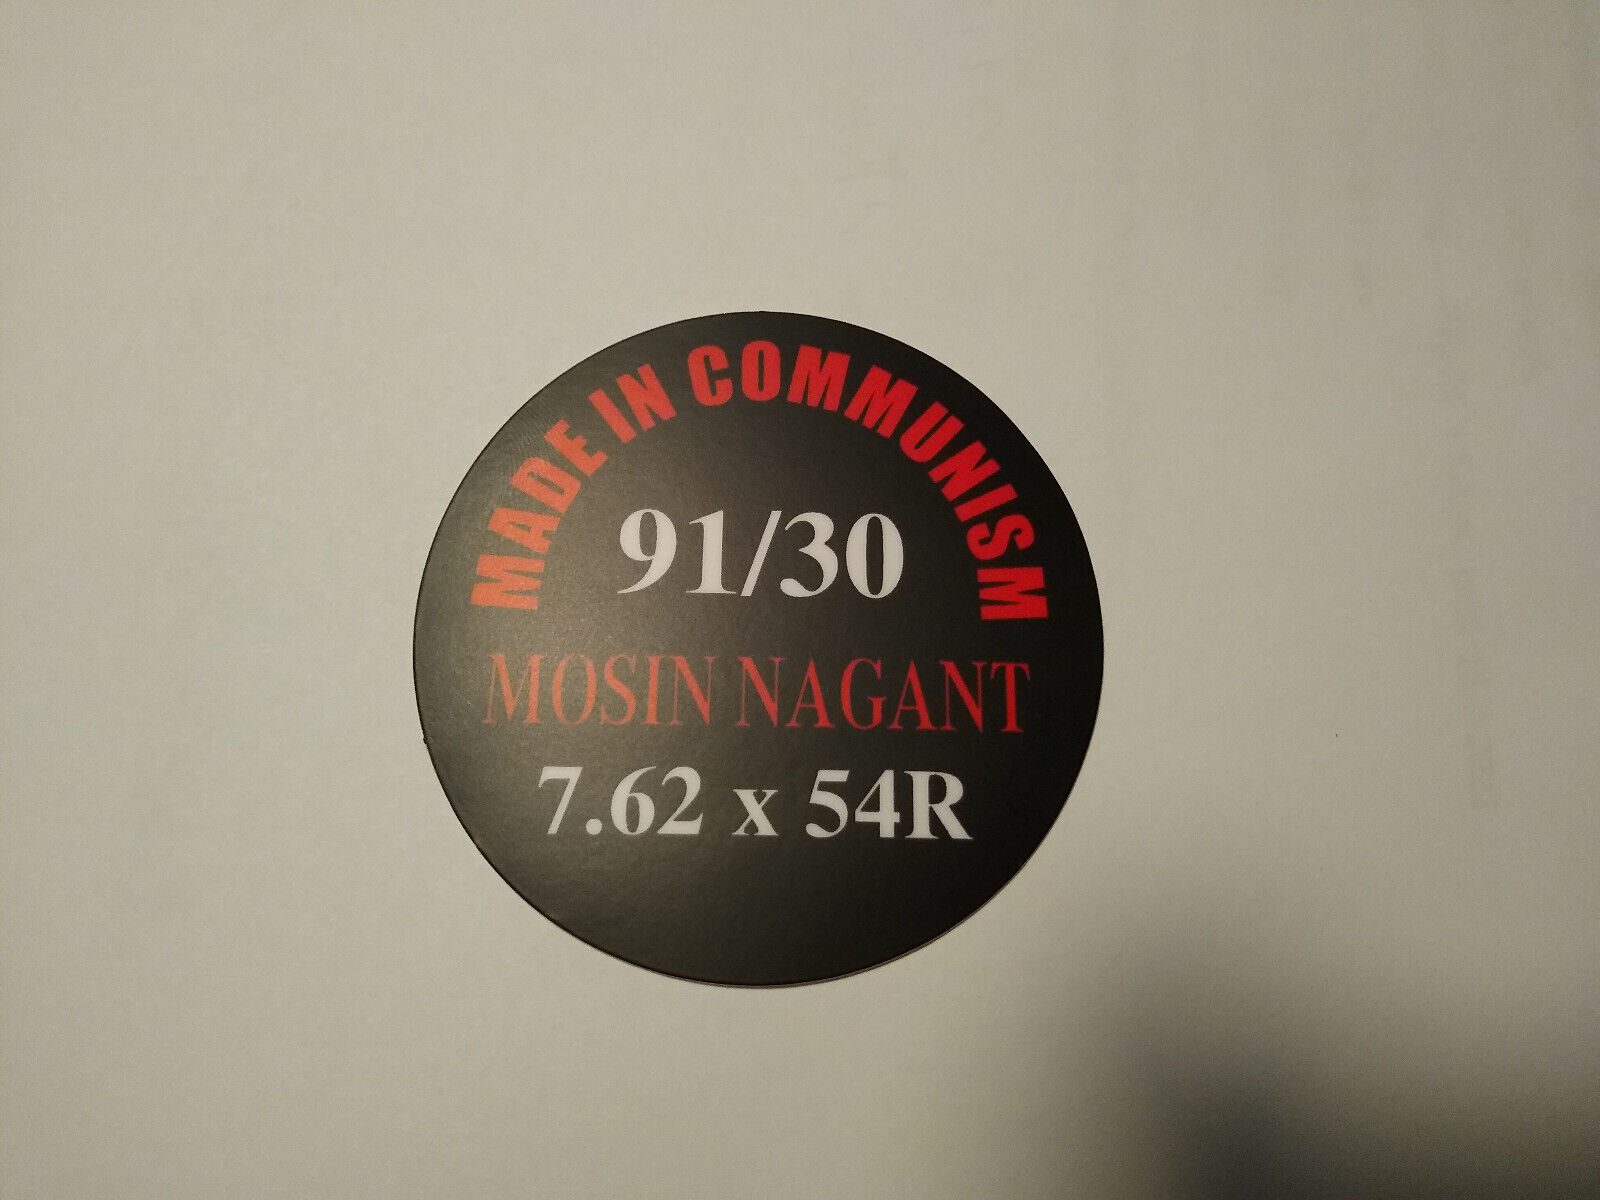 Mosin Nagant 91/30 Made in Communism,  decal